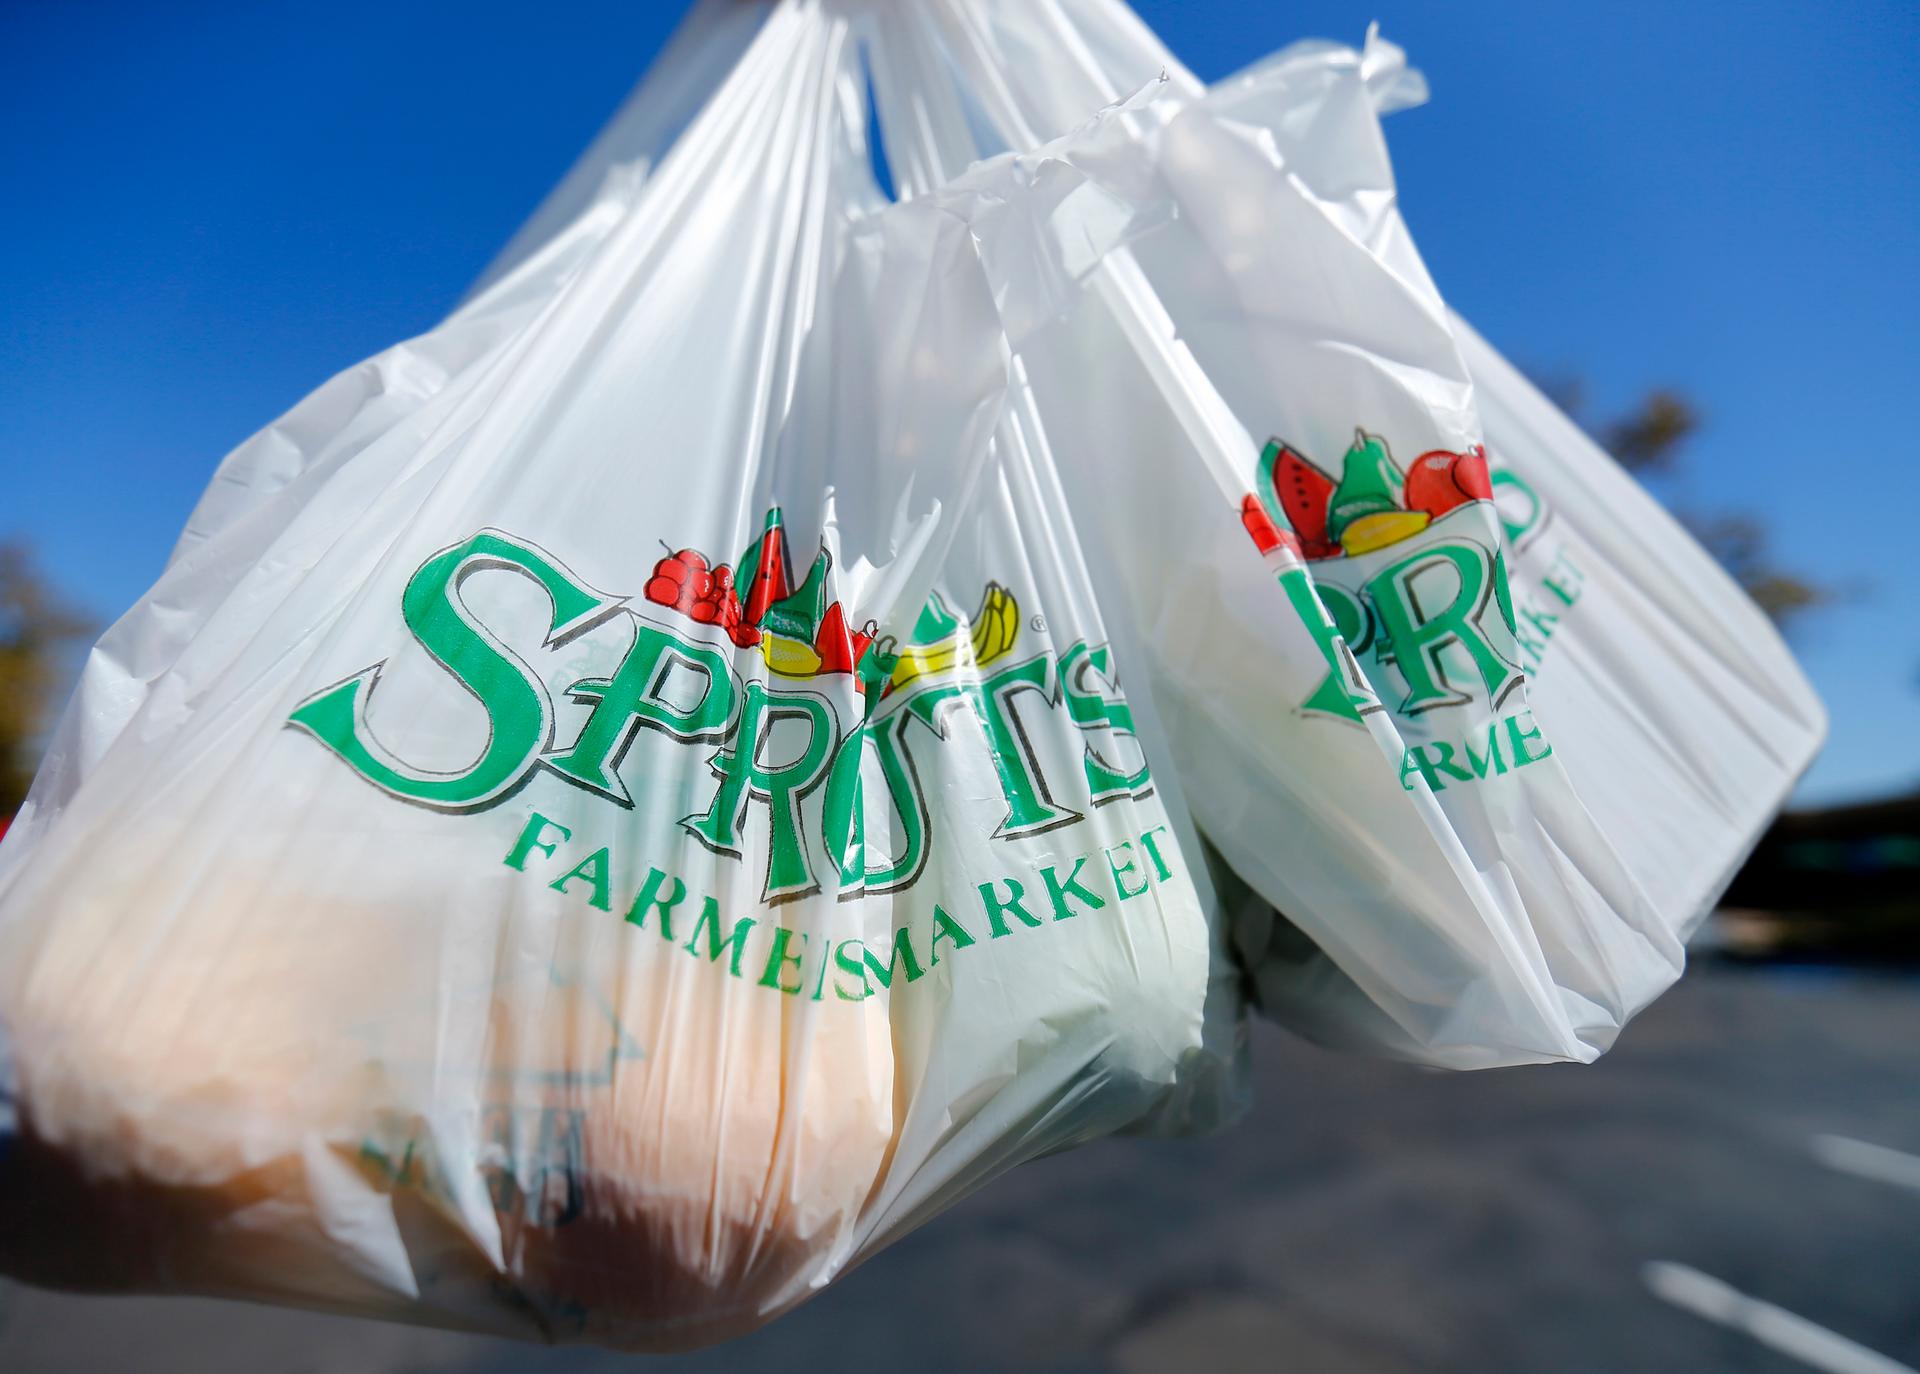 Groceries in plastic bags